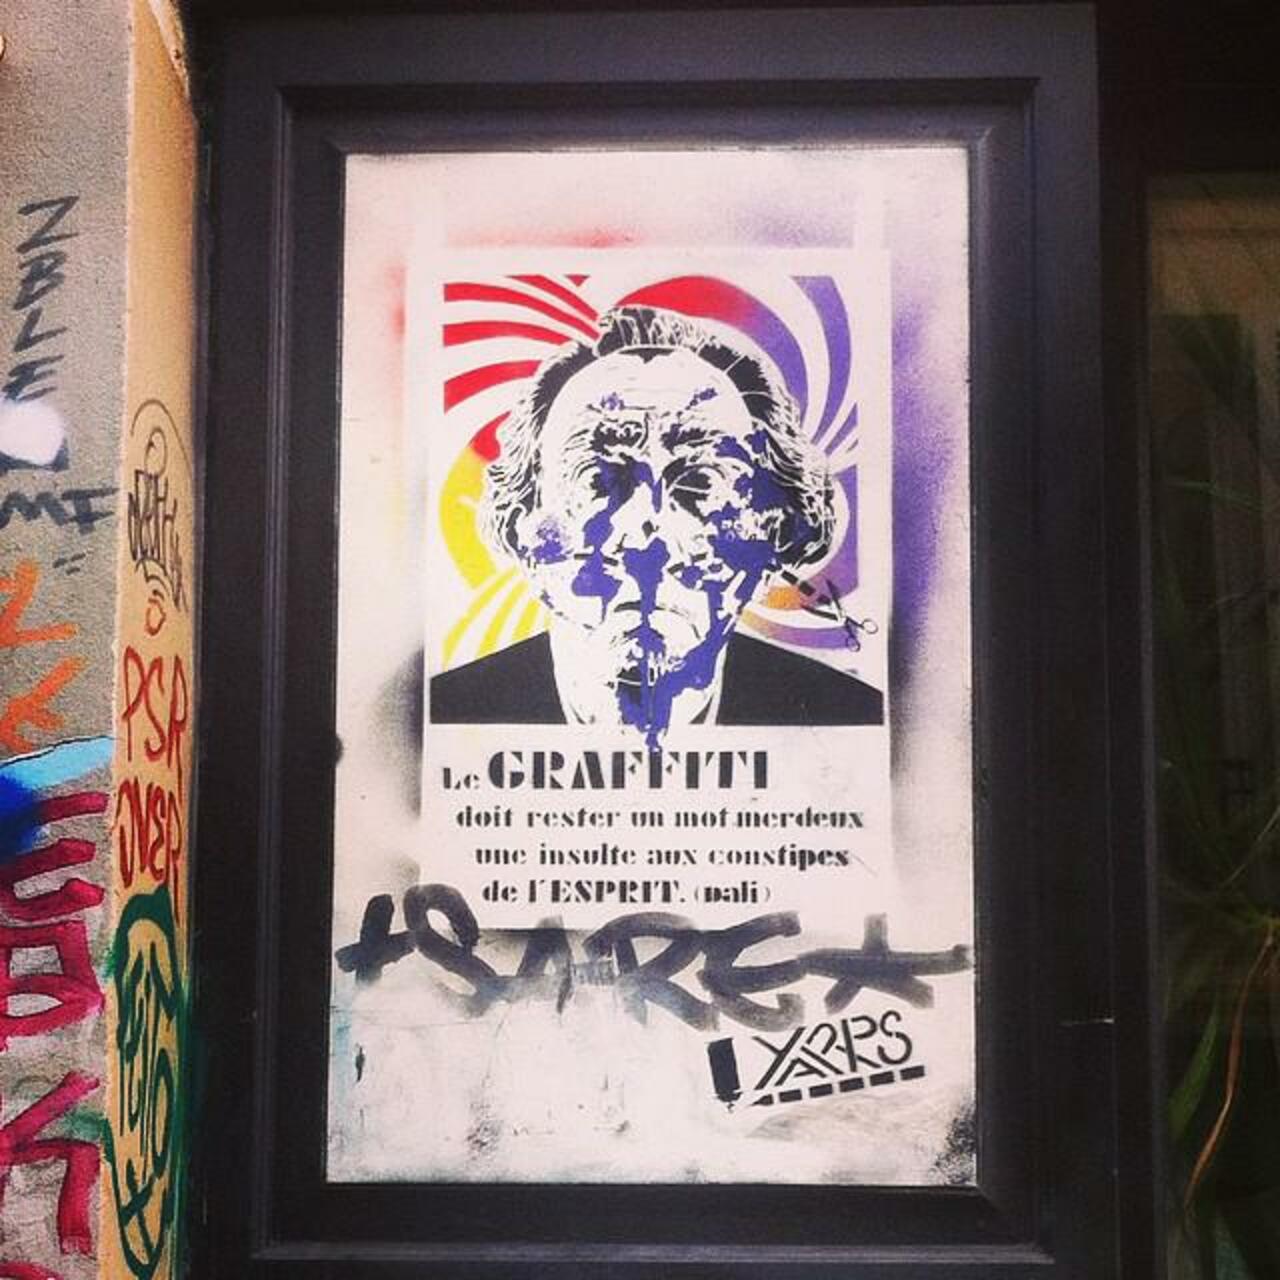 #Paris #graffiti photo by @benstagramin http://ift.tt/1OAaIaa #StreetArt http://t.co/SaY3nxiwci